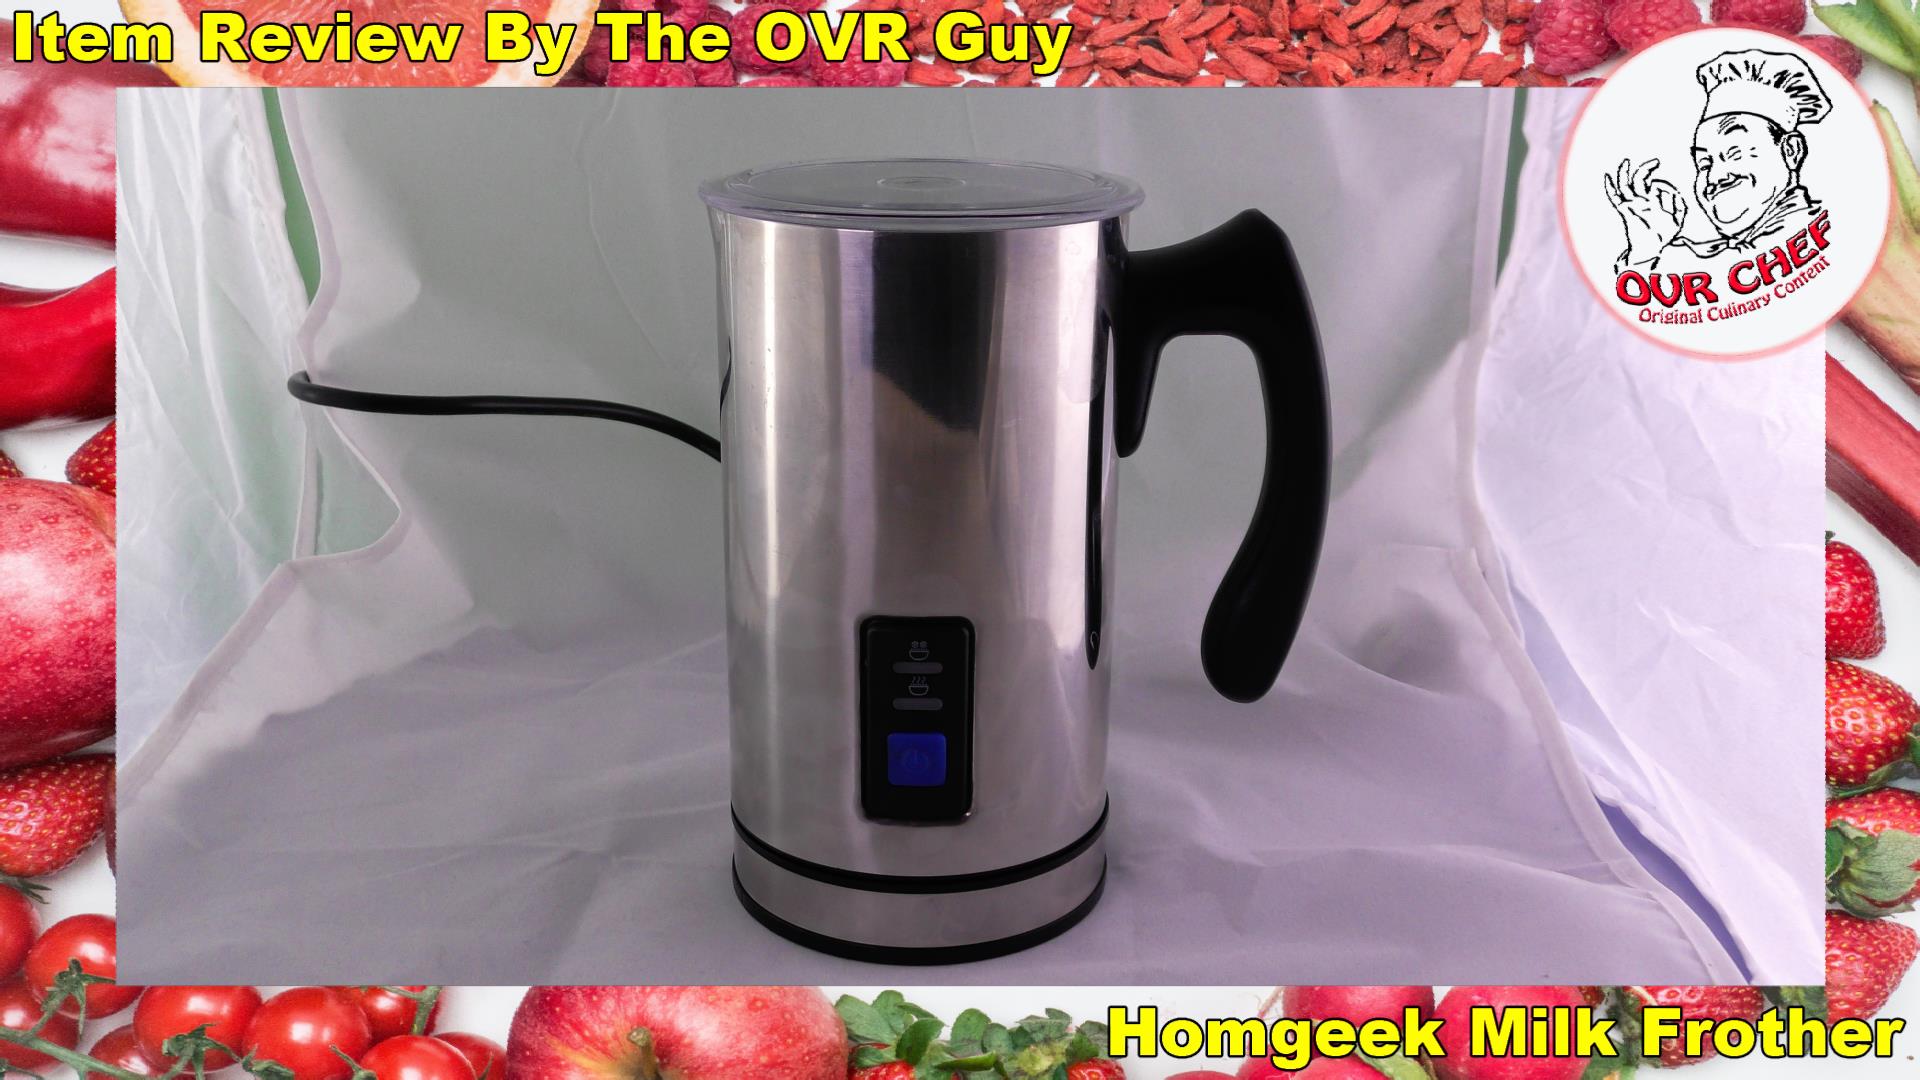 Homgeek Milk Frother Review (Thumbnail)